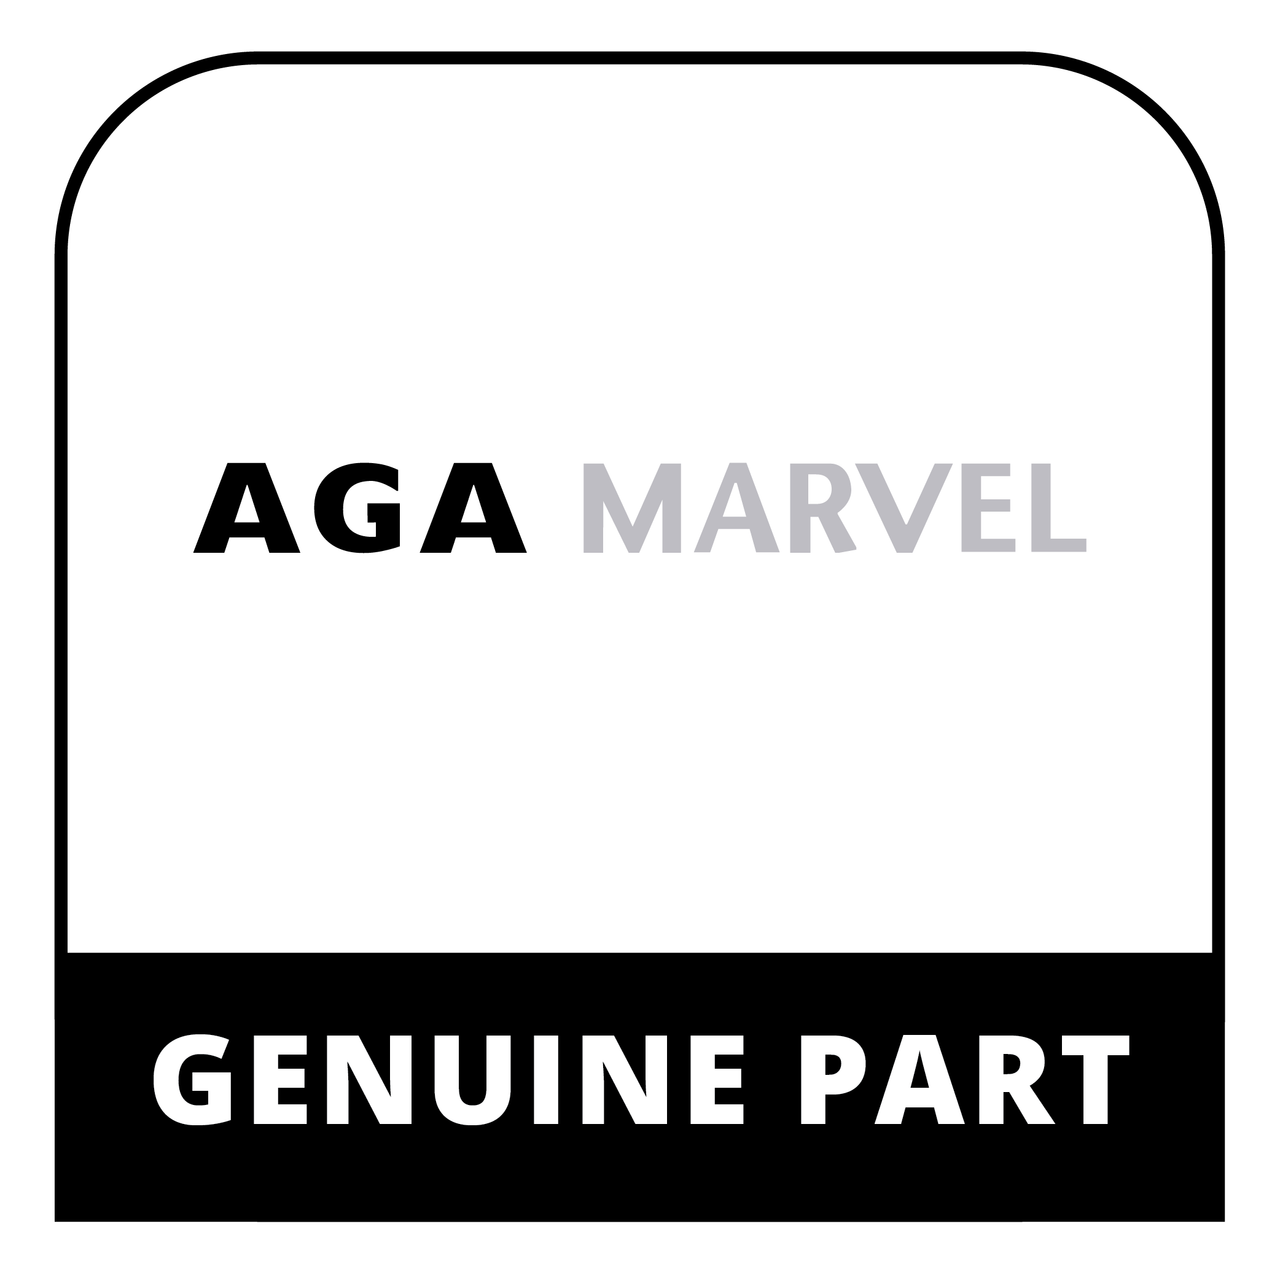 AGA Marvel AS9M49706SET6 - Joint Strip Fxg Screws Aga - Genuine AGA Marvel Part